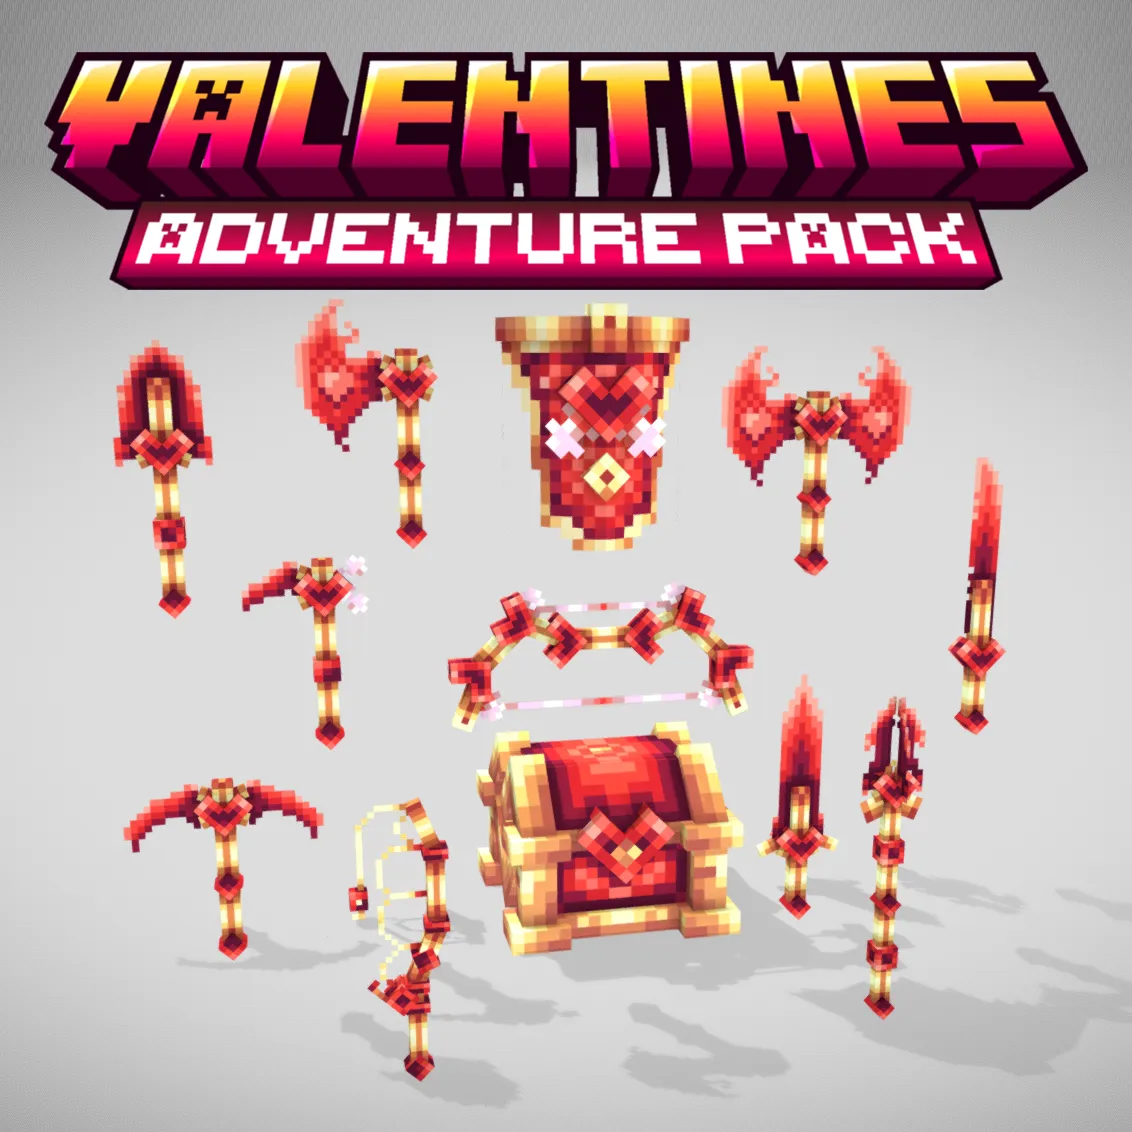 Creatif_Realms_Valentines_Adventure_Pack